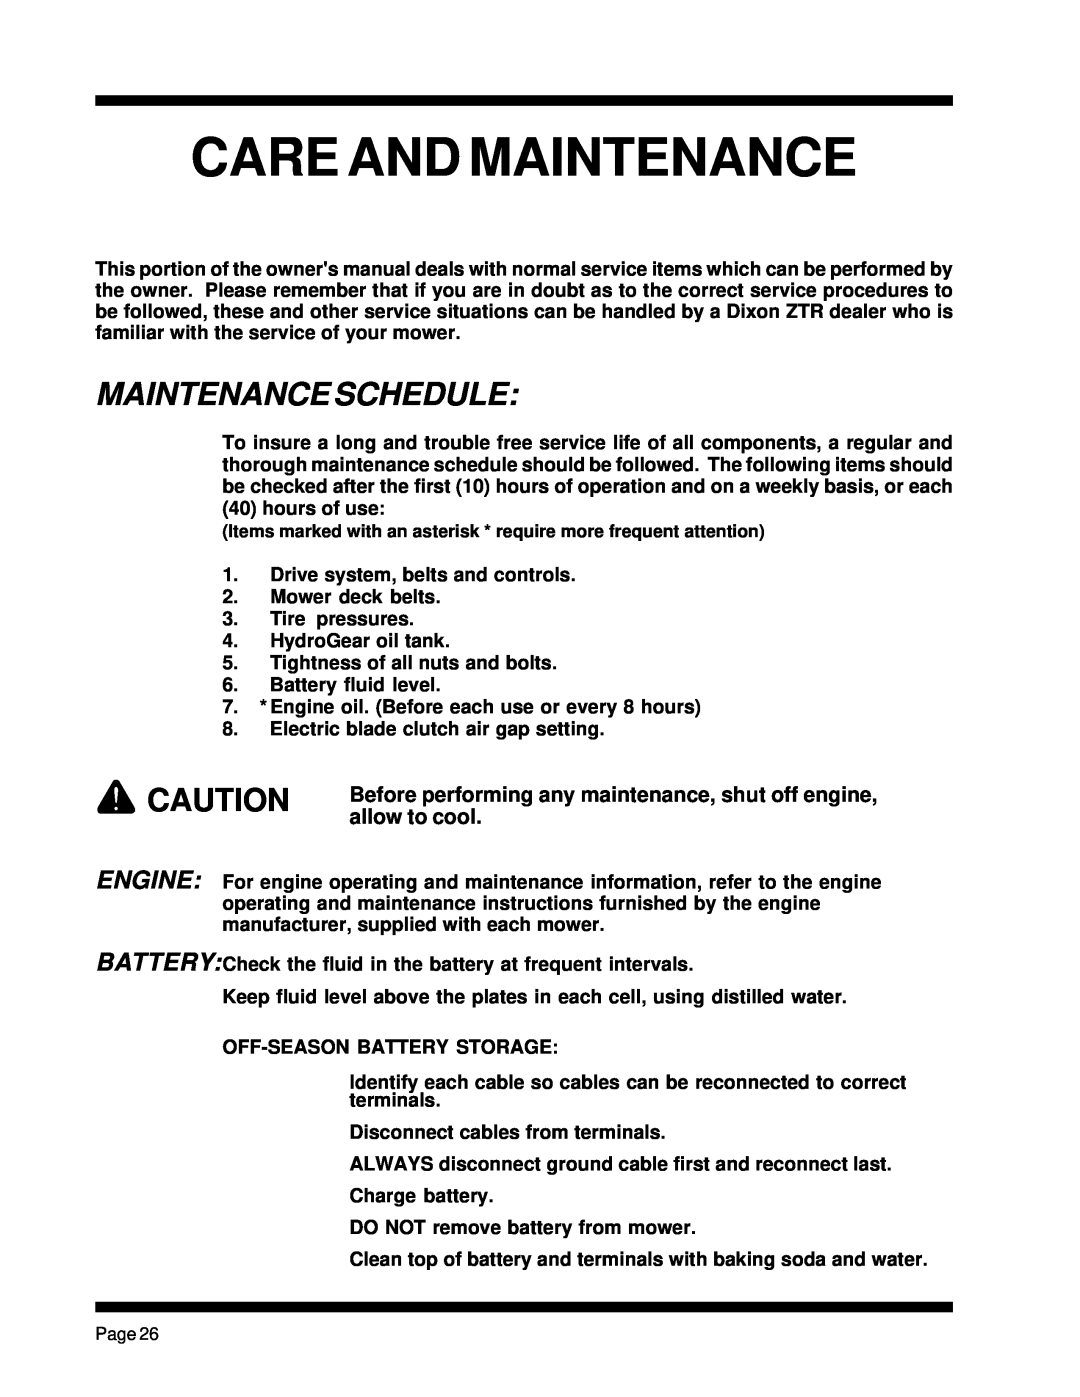 Dixon ZTR 5023, ZTR 5425 manual Care And Maintenance, Maintenance Schedule 